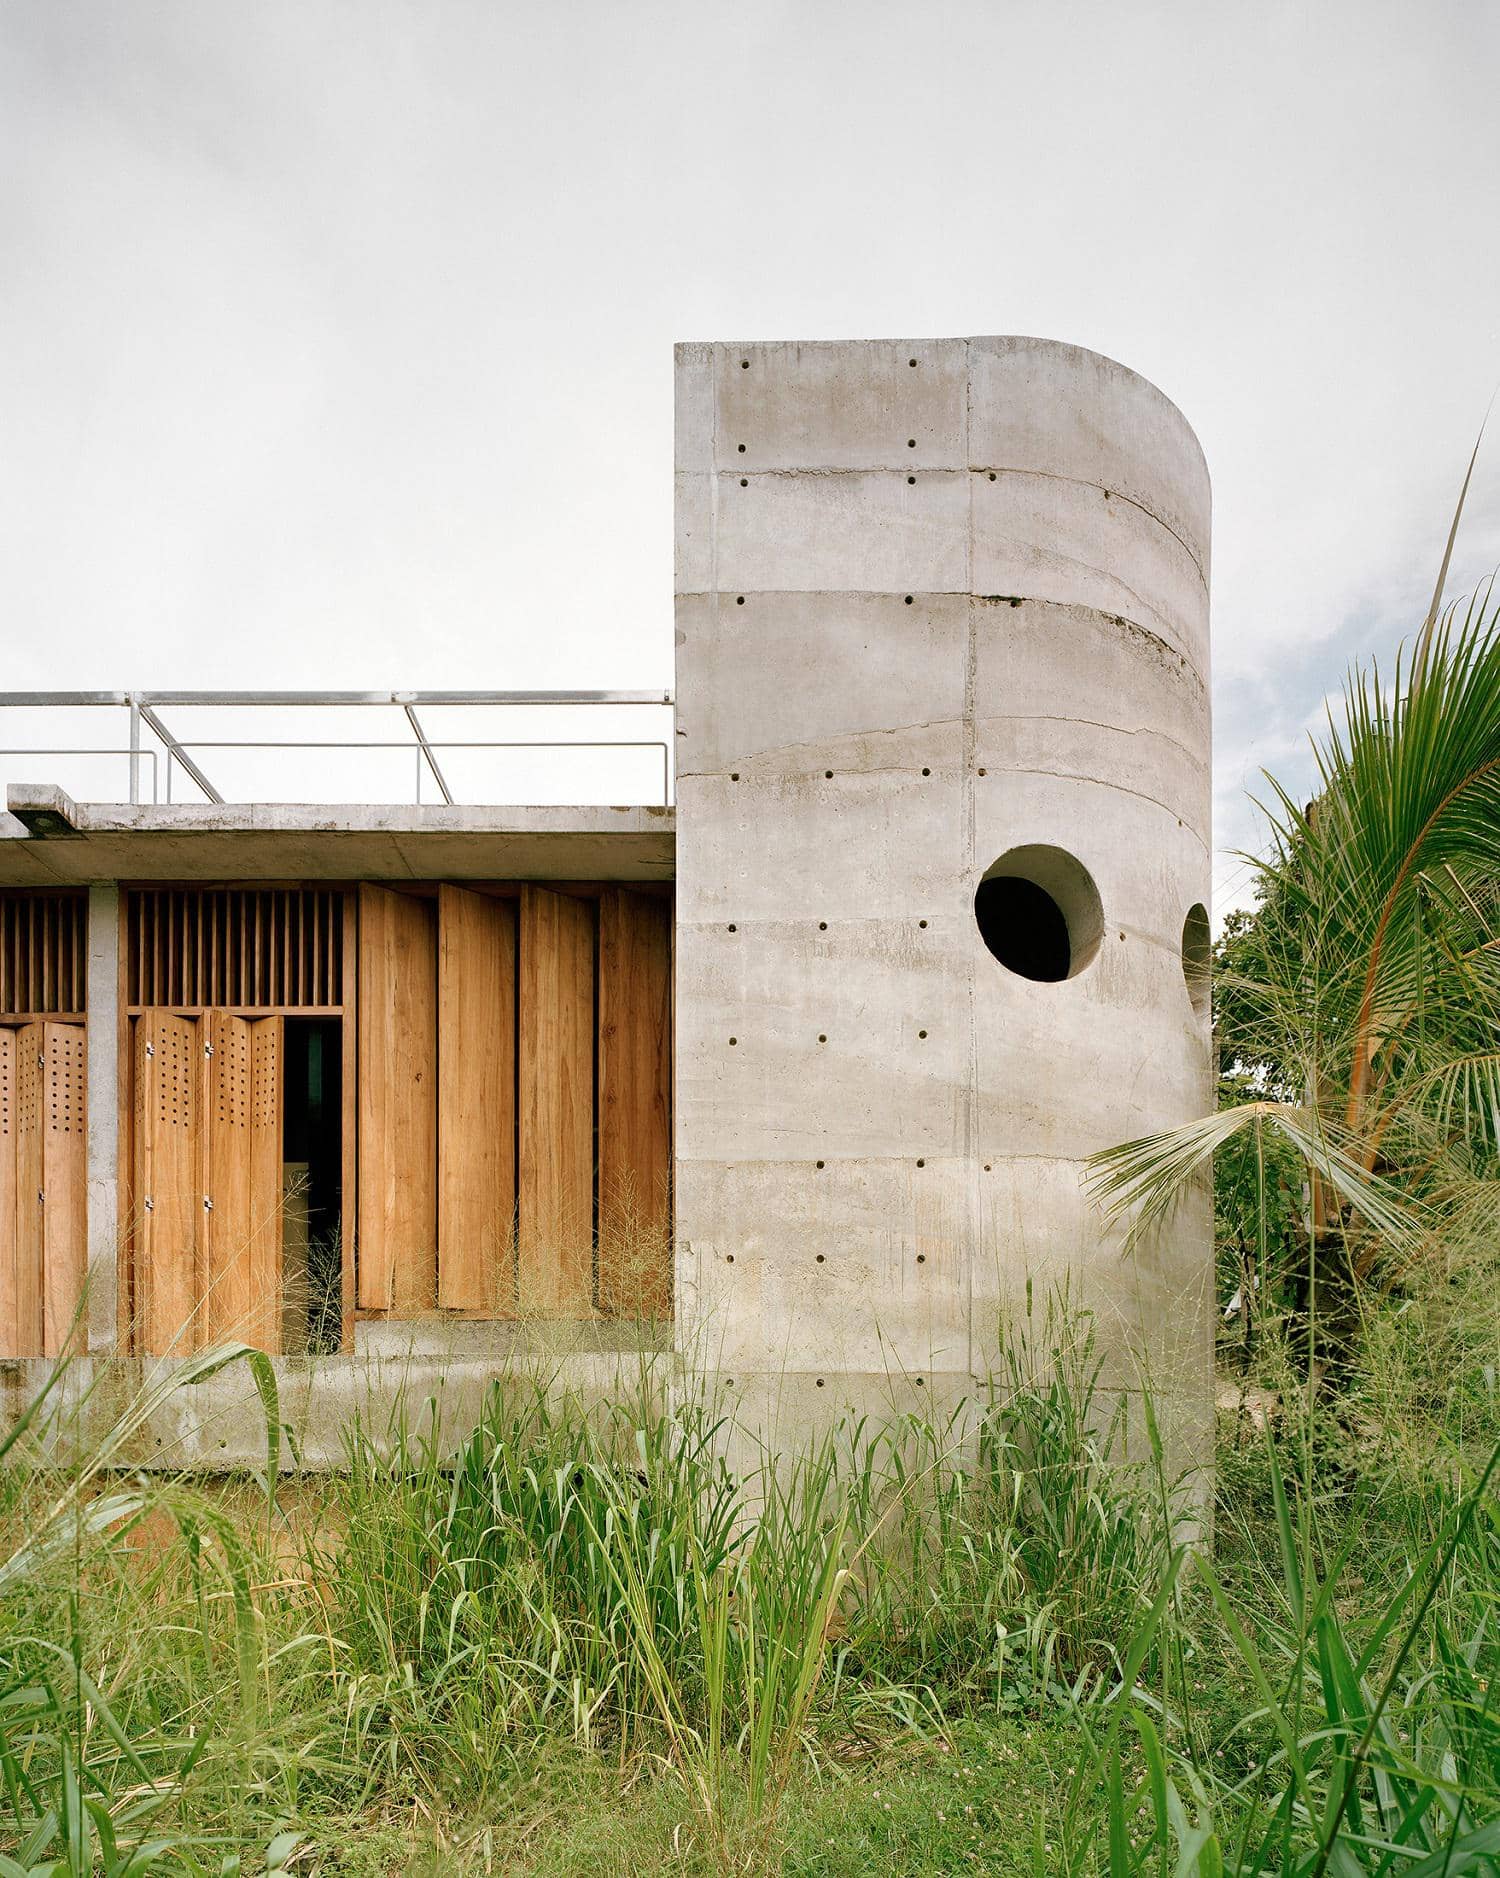 A Guesthouse in Sri Lanka designed by Atelier Abraha Achermann